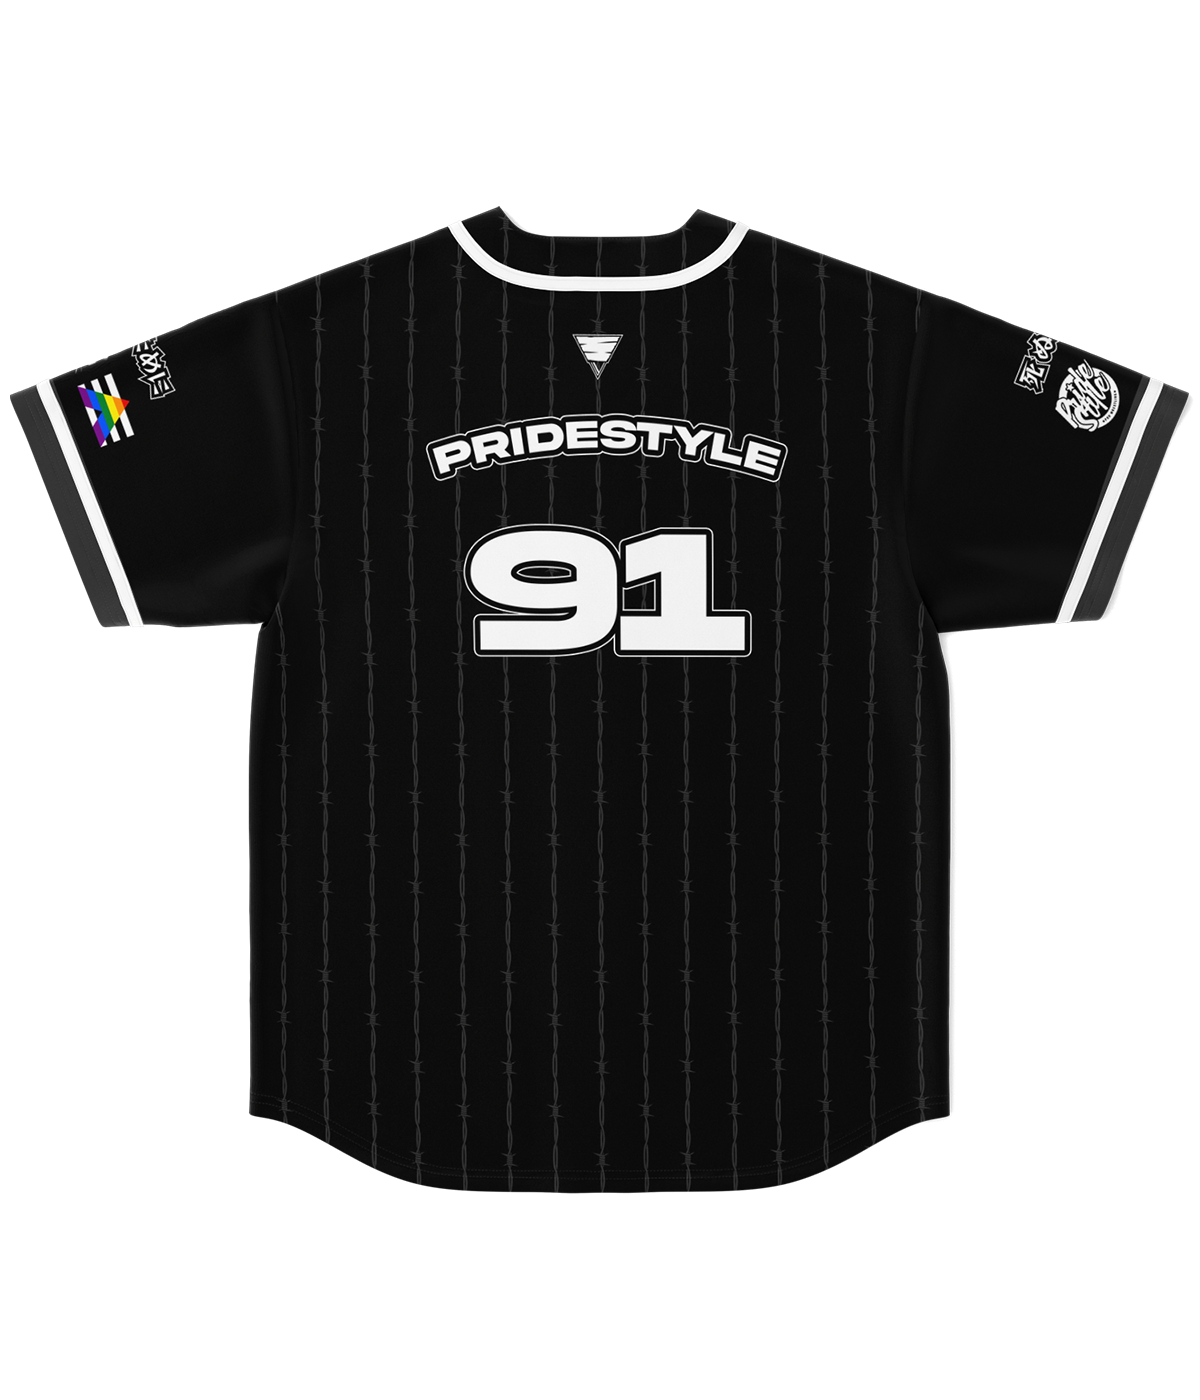 PrideStyle Baseball Jersey：Stiff Blade Apparel Co.